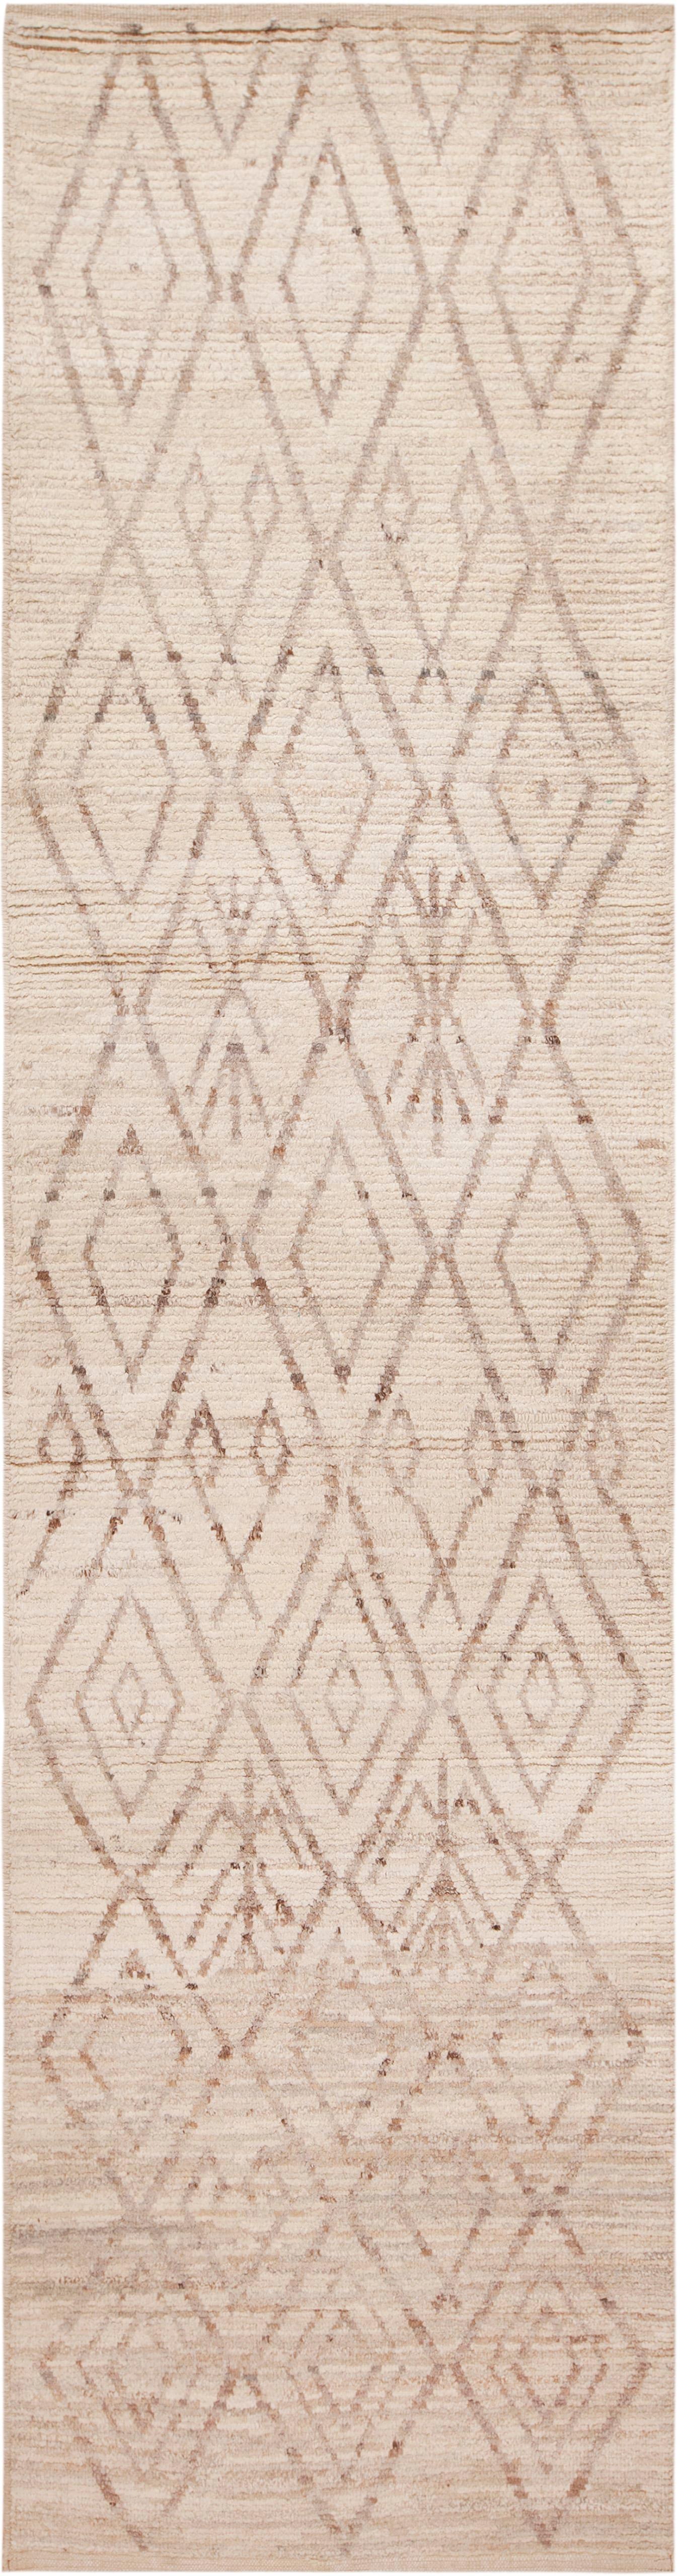 A Beautiful Tribal Beni Ourain Design Modern Contemporary Runner Rug, Country of origin: Central Asia, circa date: Modern Rugs